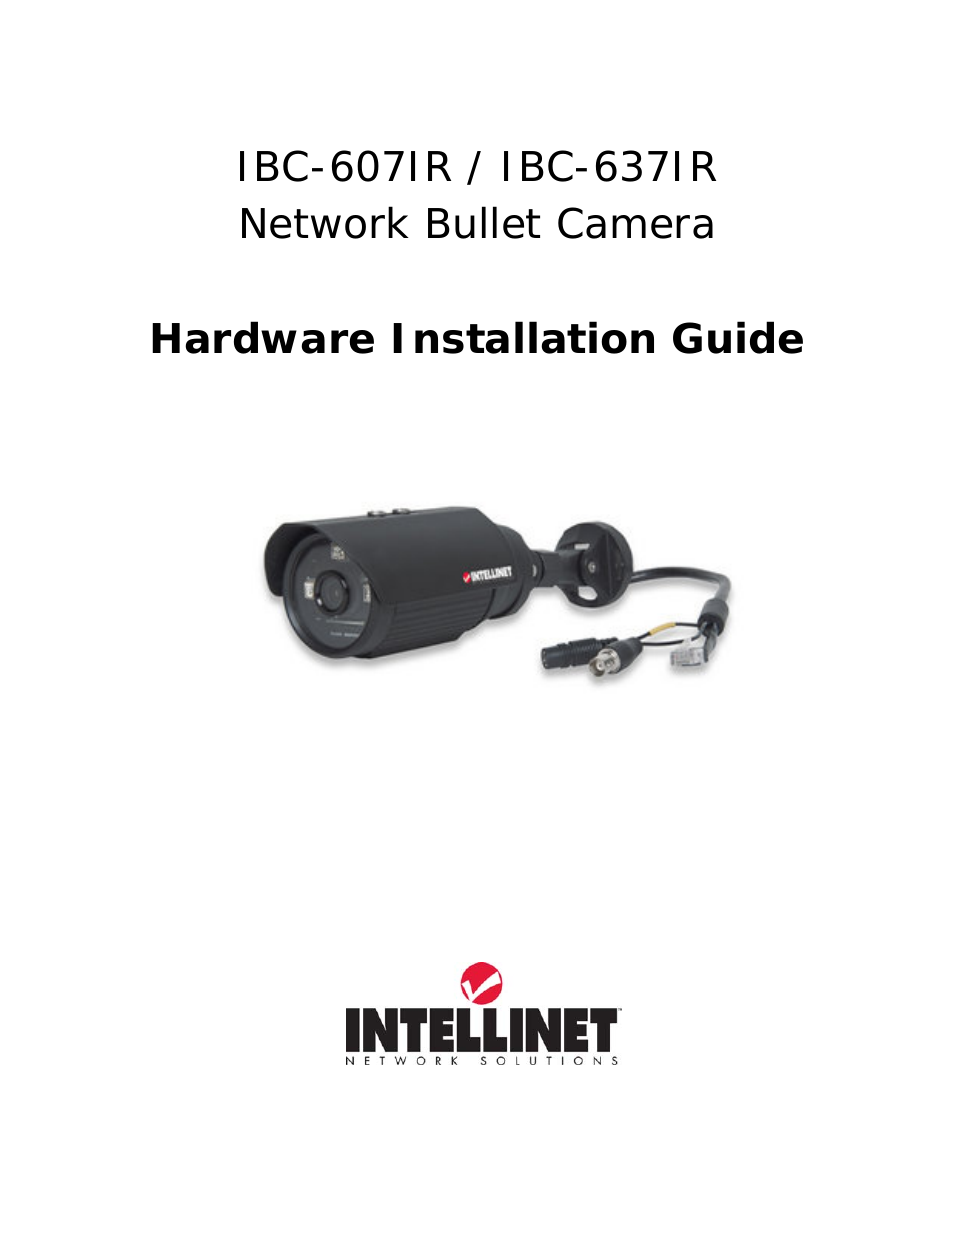 ICC-130 Hardware Installation Guide